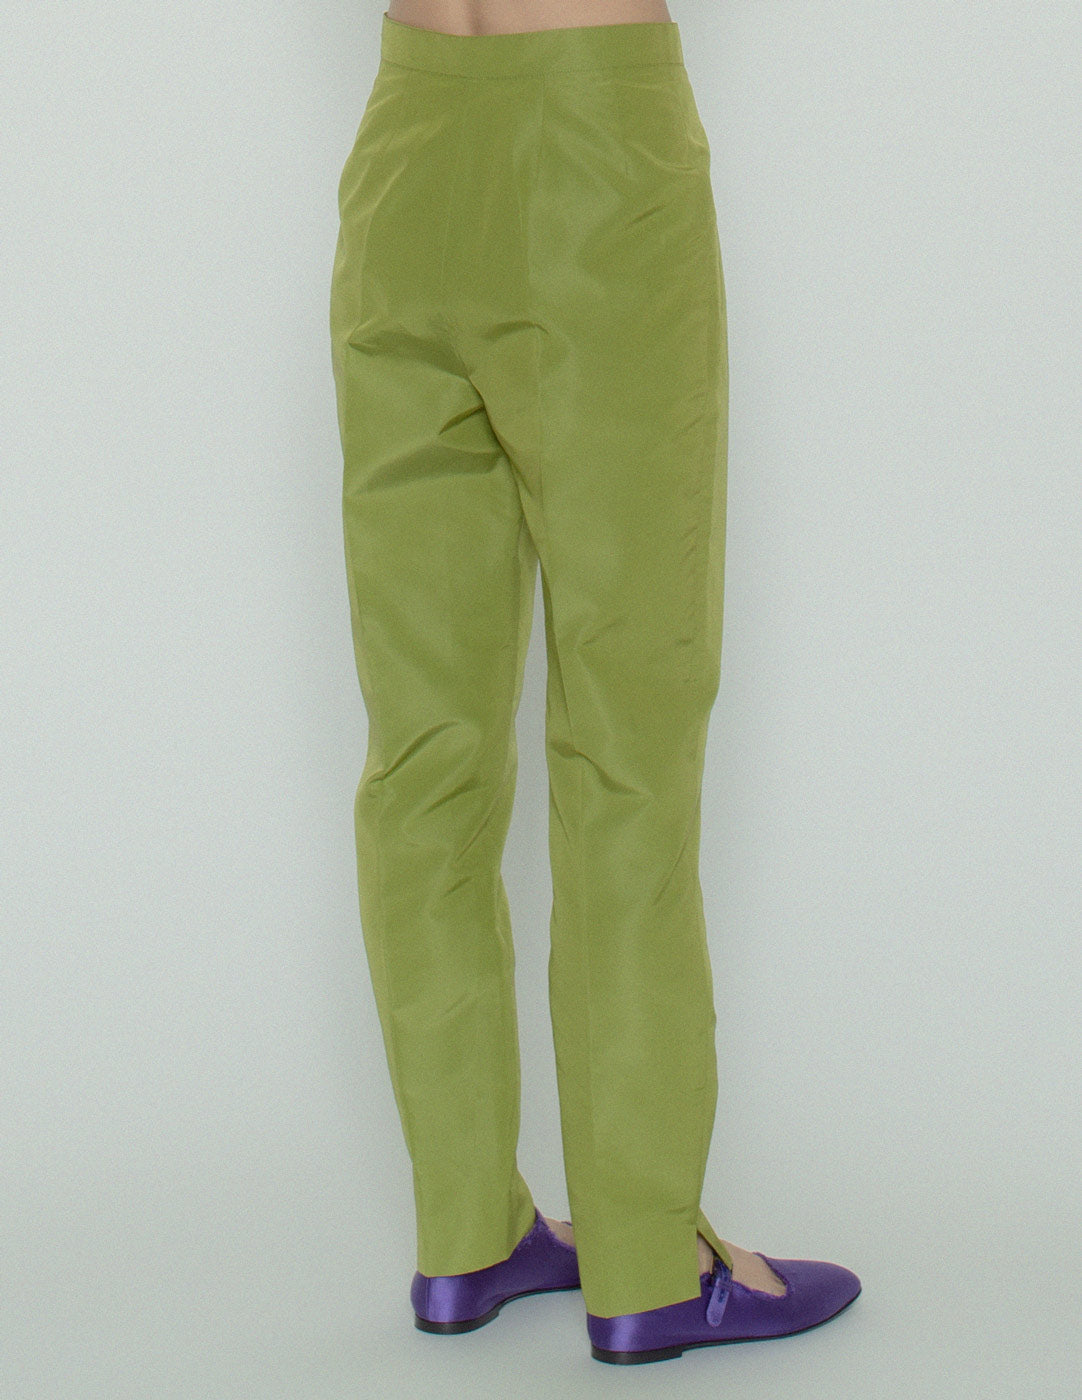 Prada chartreuse green silk trousers back detail